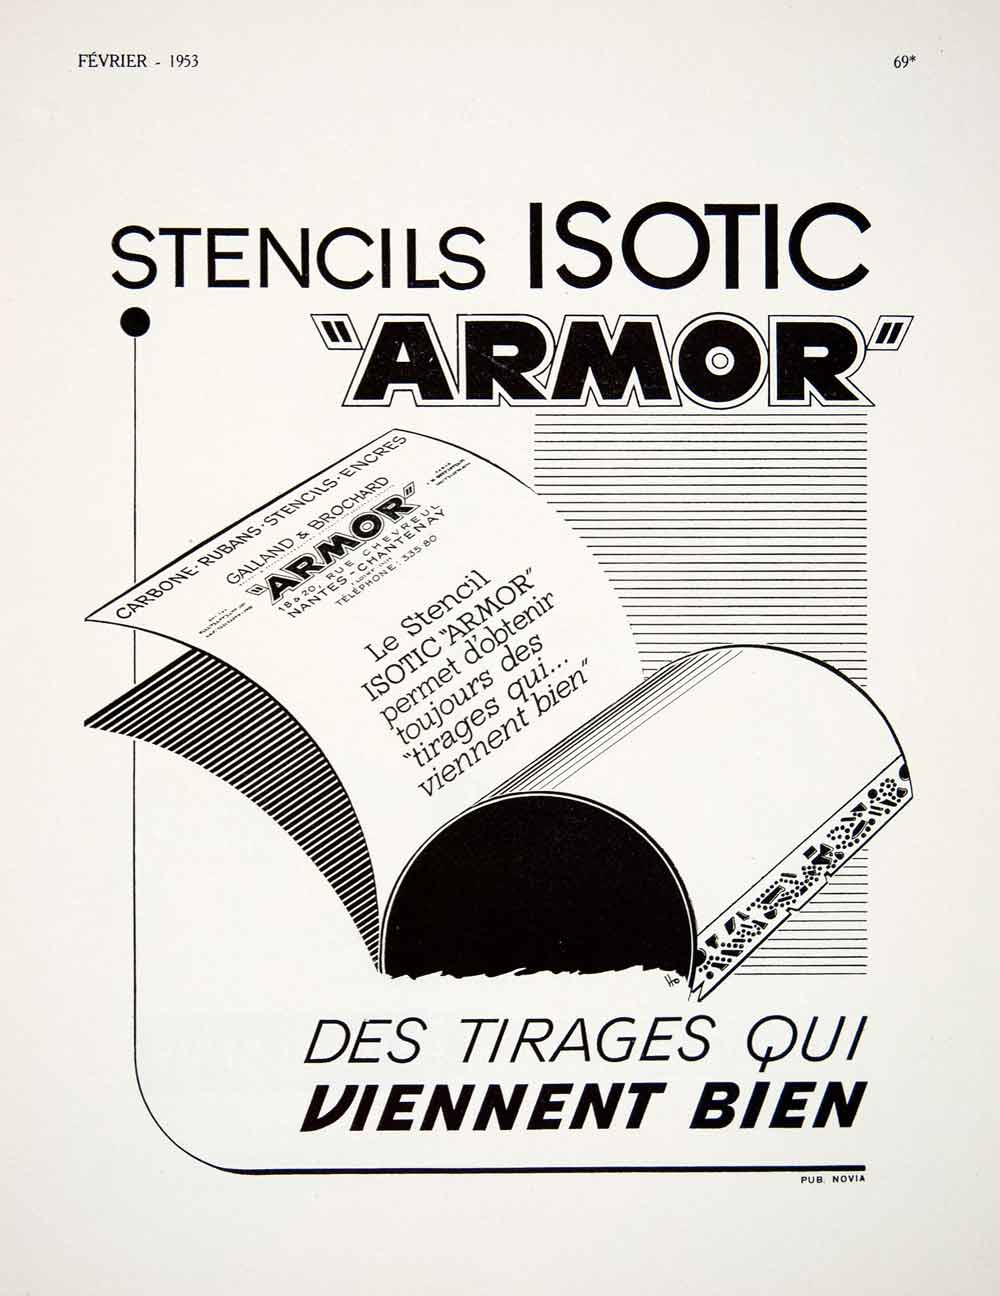 1953 Ad Stencils Isotic Armor Galland Brochard 18 Rue Chevreul Carbon Paper VEN8